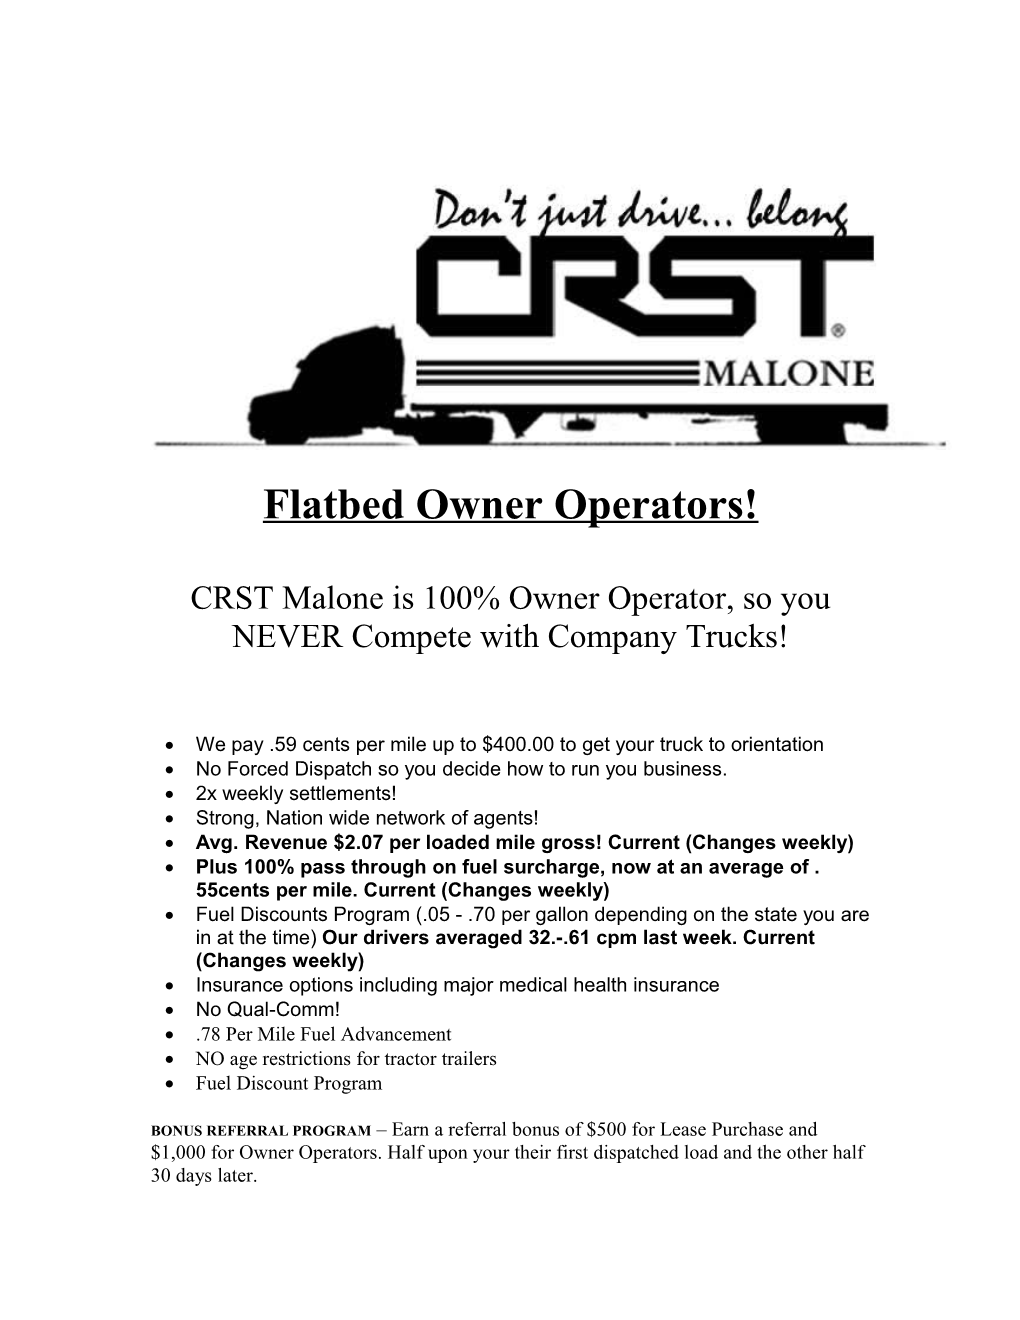 Flatbed Owner Operators